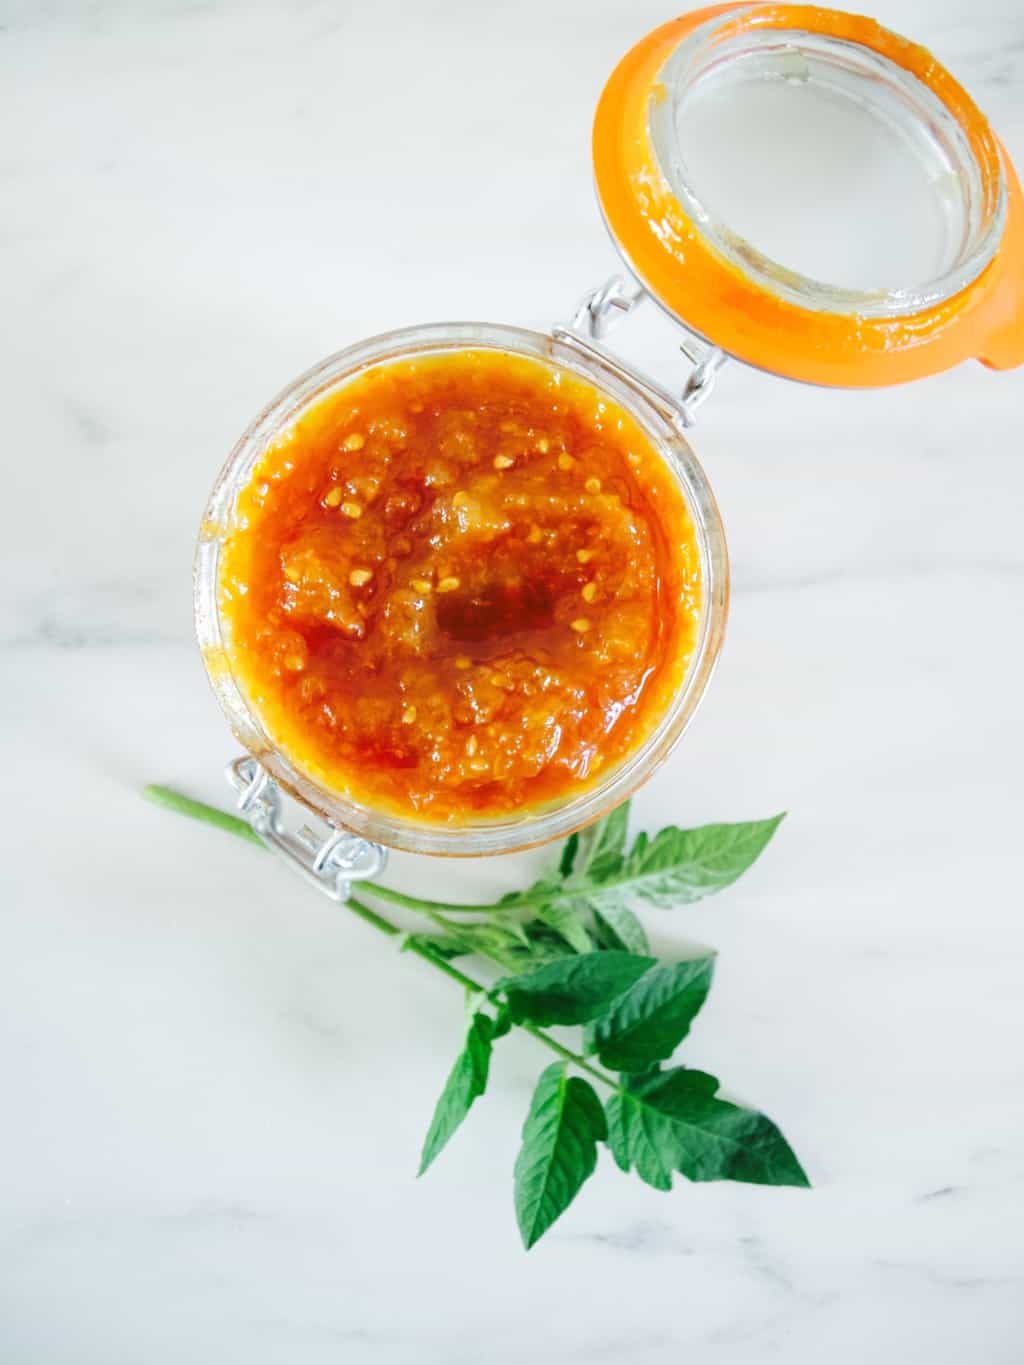 End-of-season tomato jam recipe